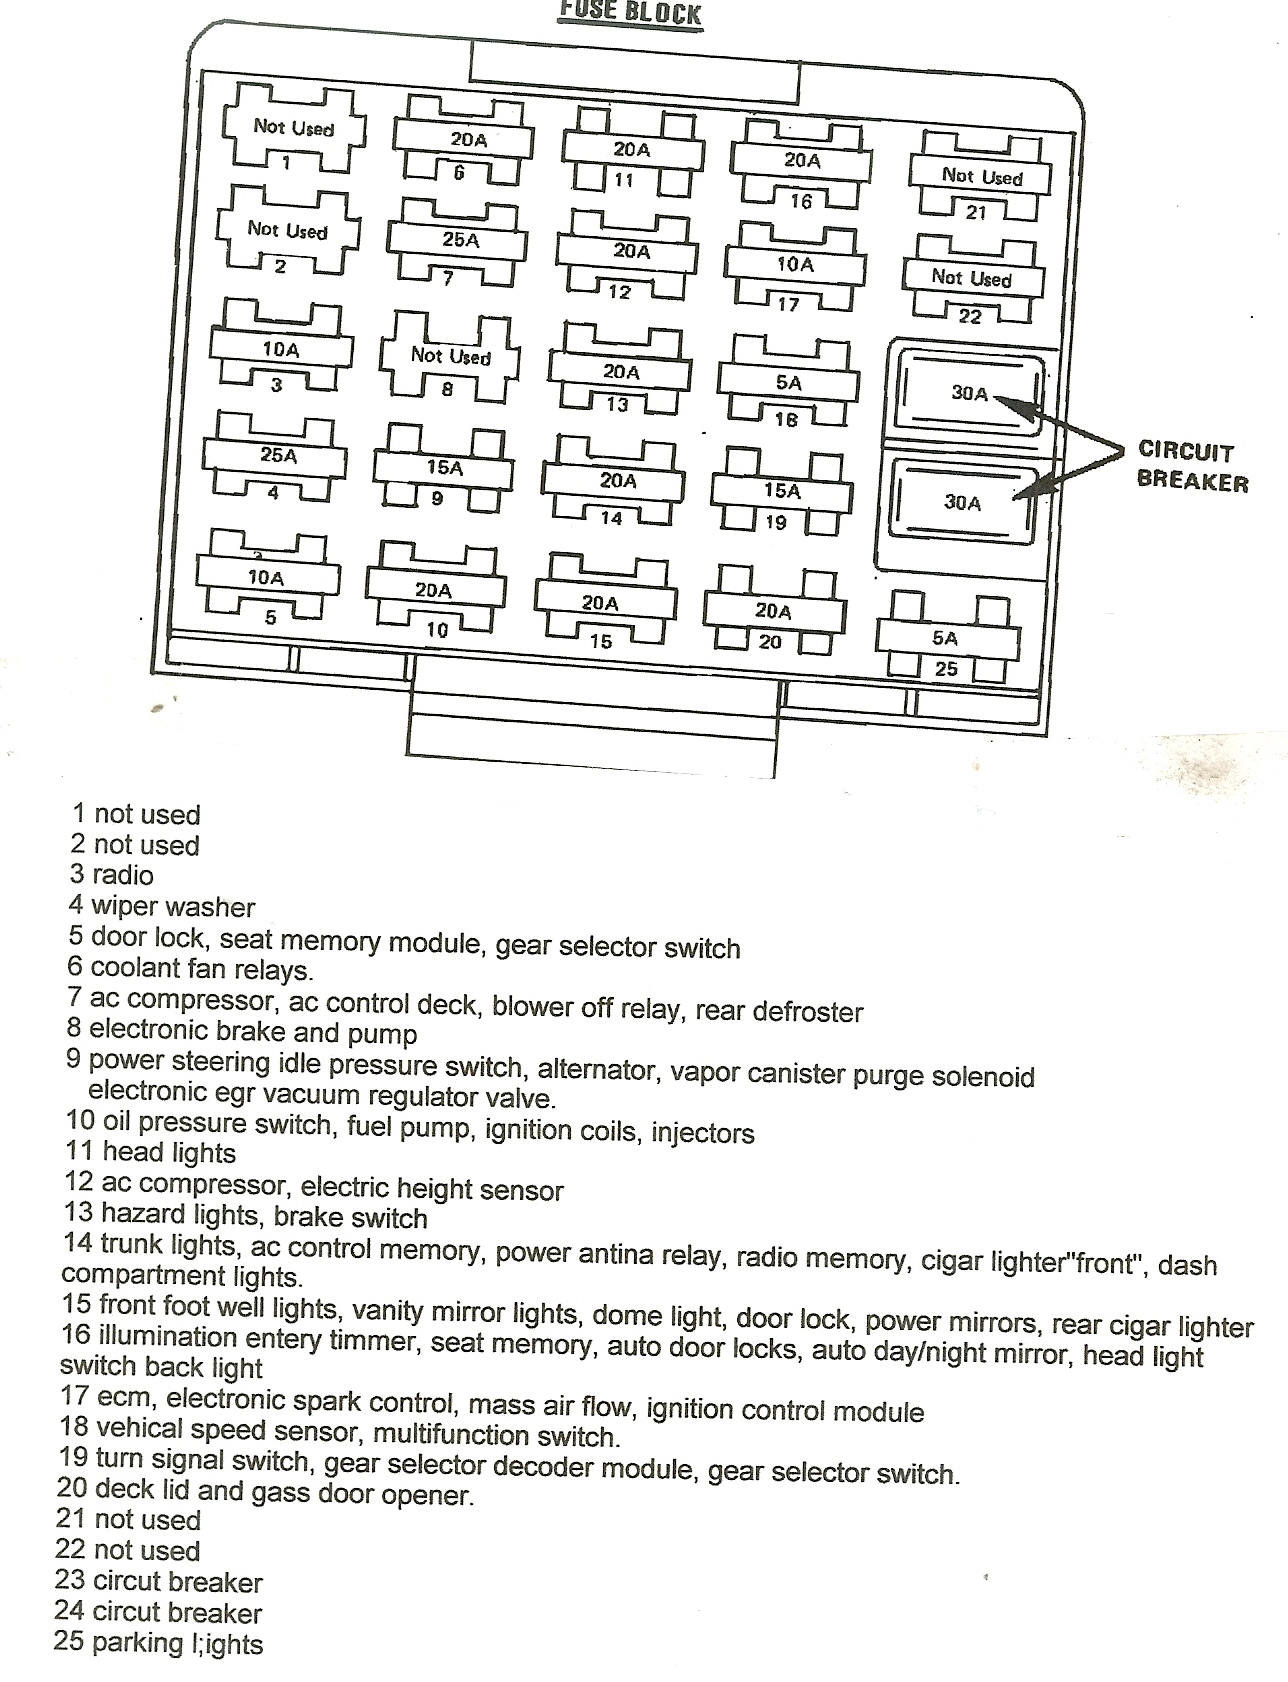 1984 Oldsmobile Delta 88 Wiring Diagram - Wiring Diagram